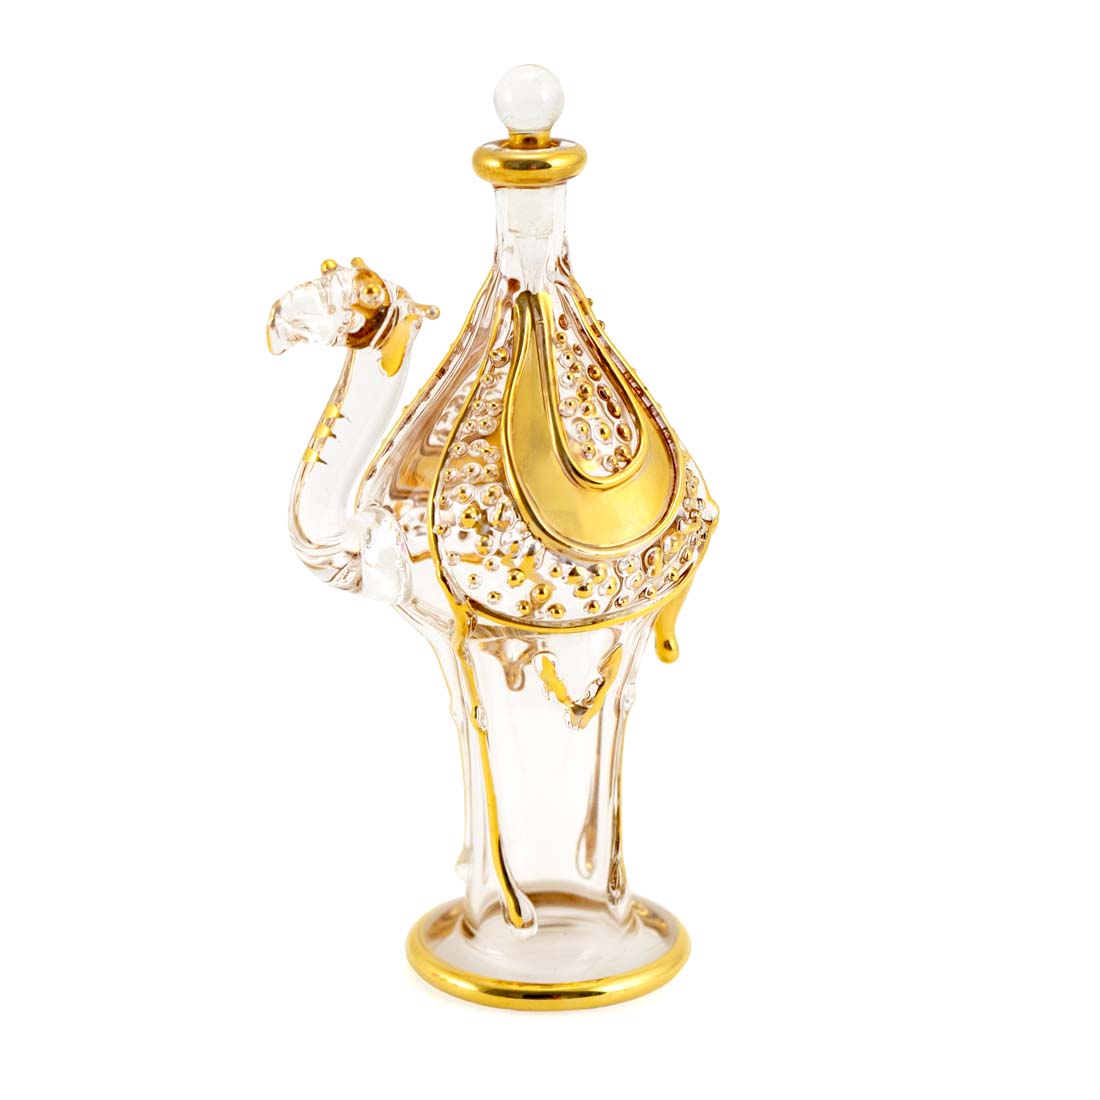 Camel Perfume Bottle